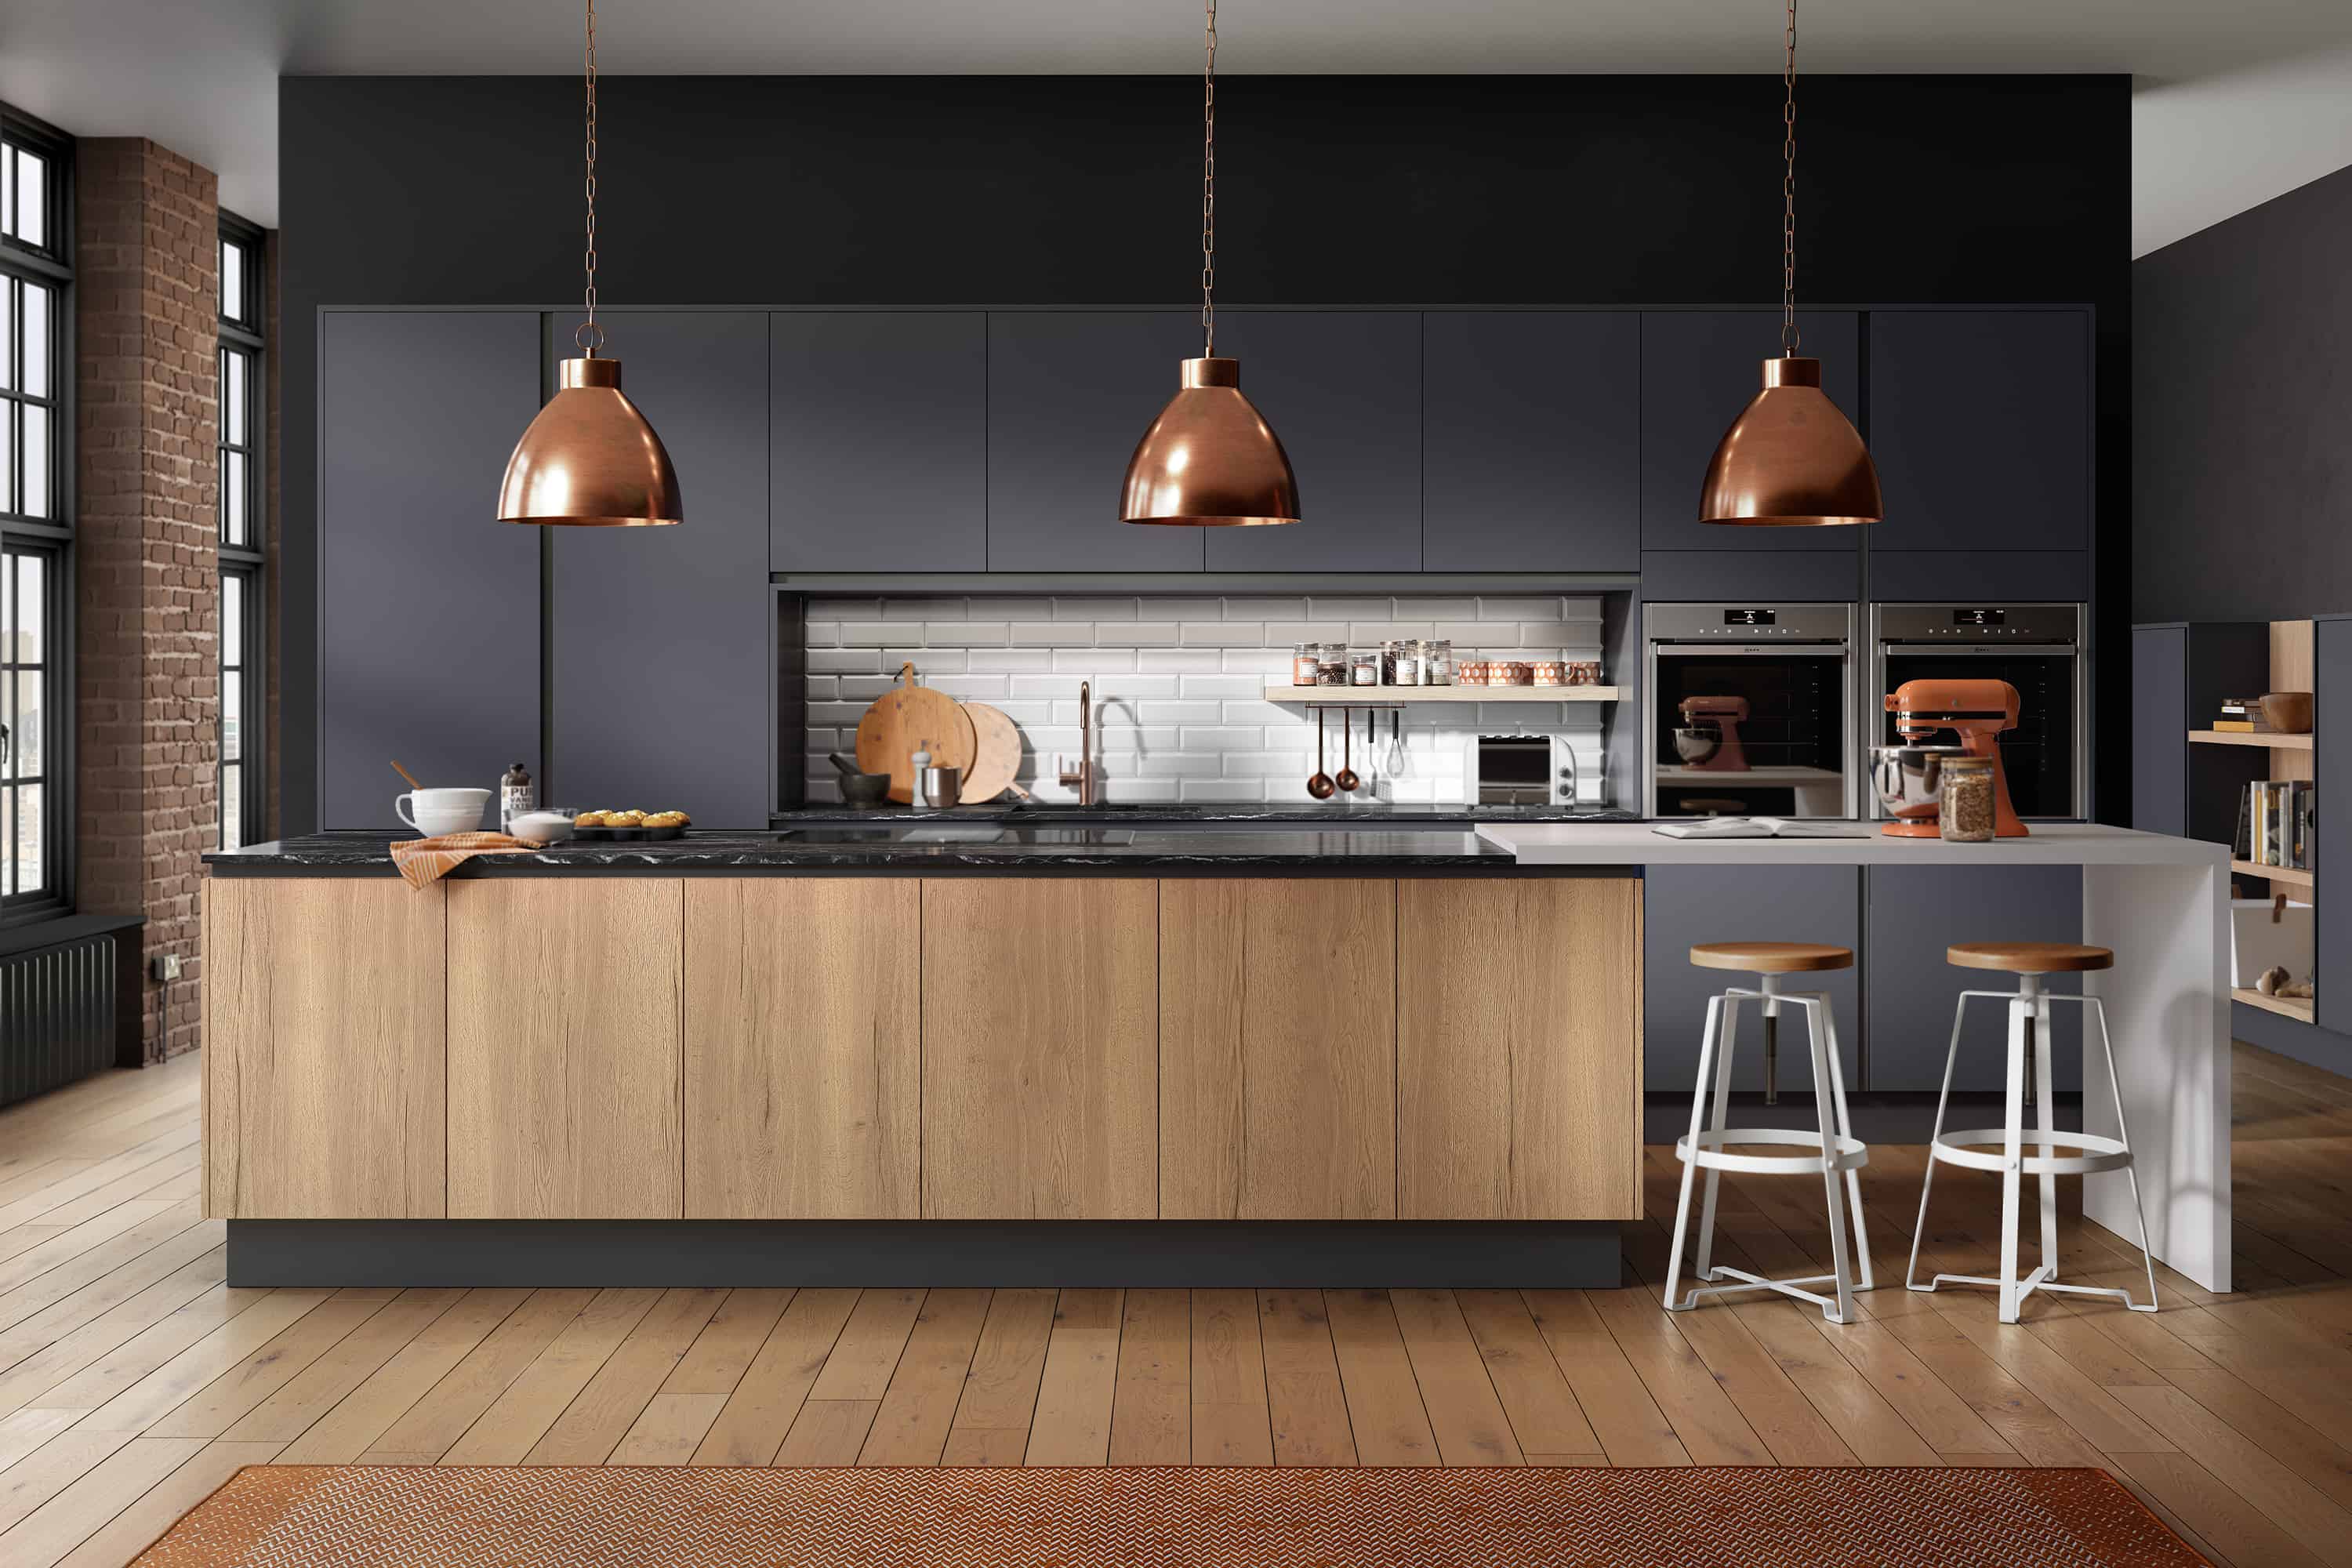 kitchen design idea with dark countertops